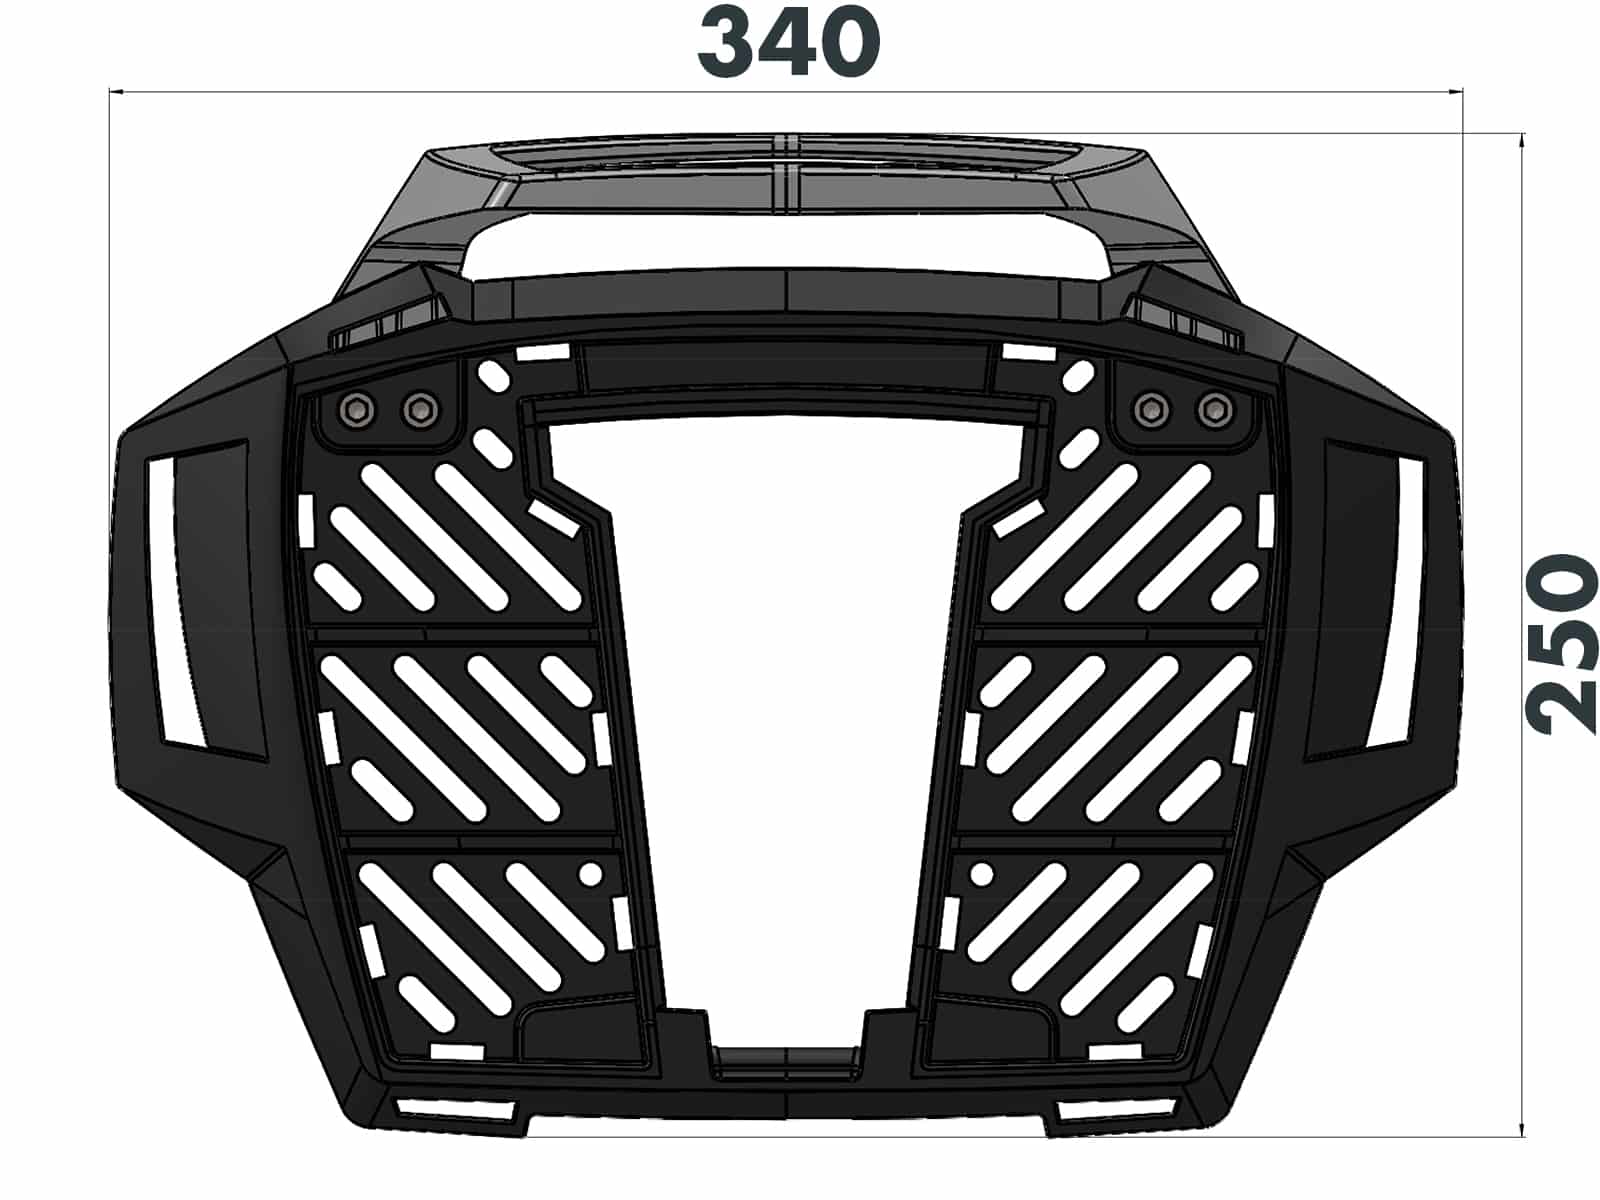 Alurack top case carrier anthracite/black for Honda CB 500 X (2019-2023)